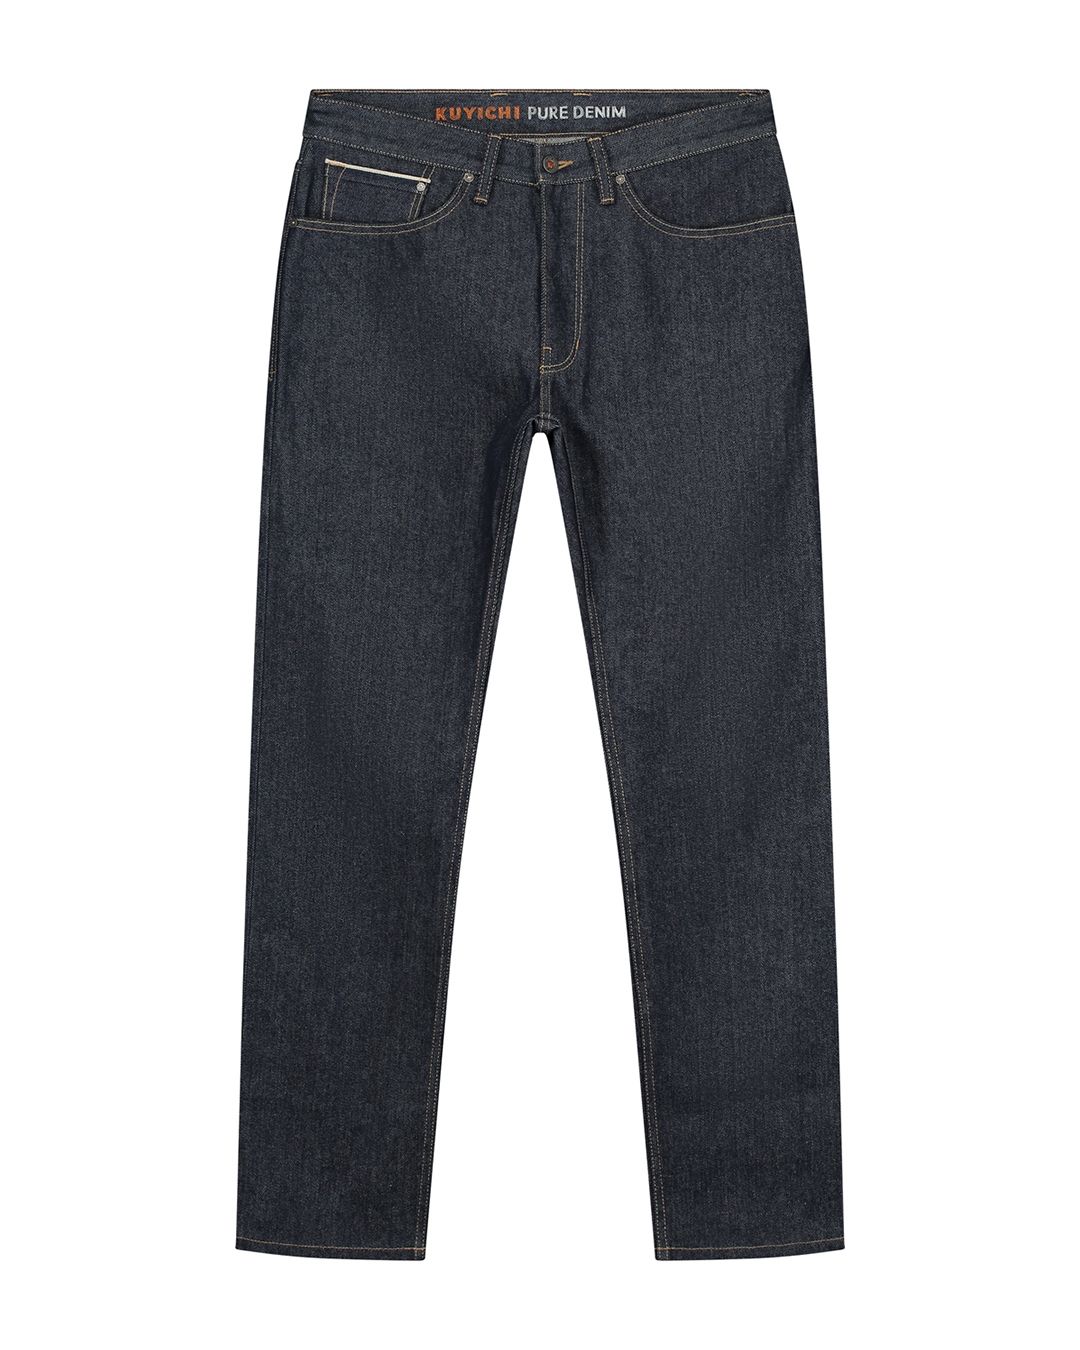 Scott regular fit jeans dry denim selvedge gerecycled